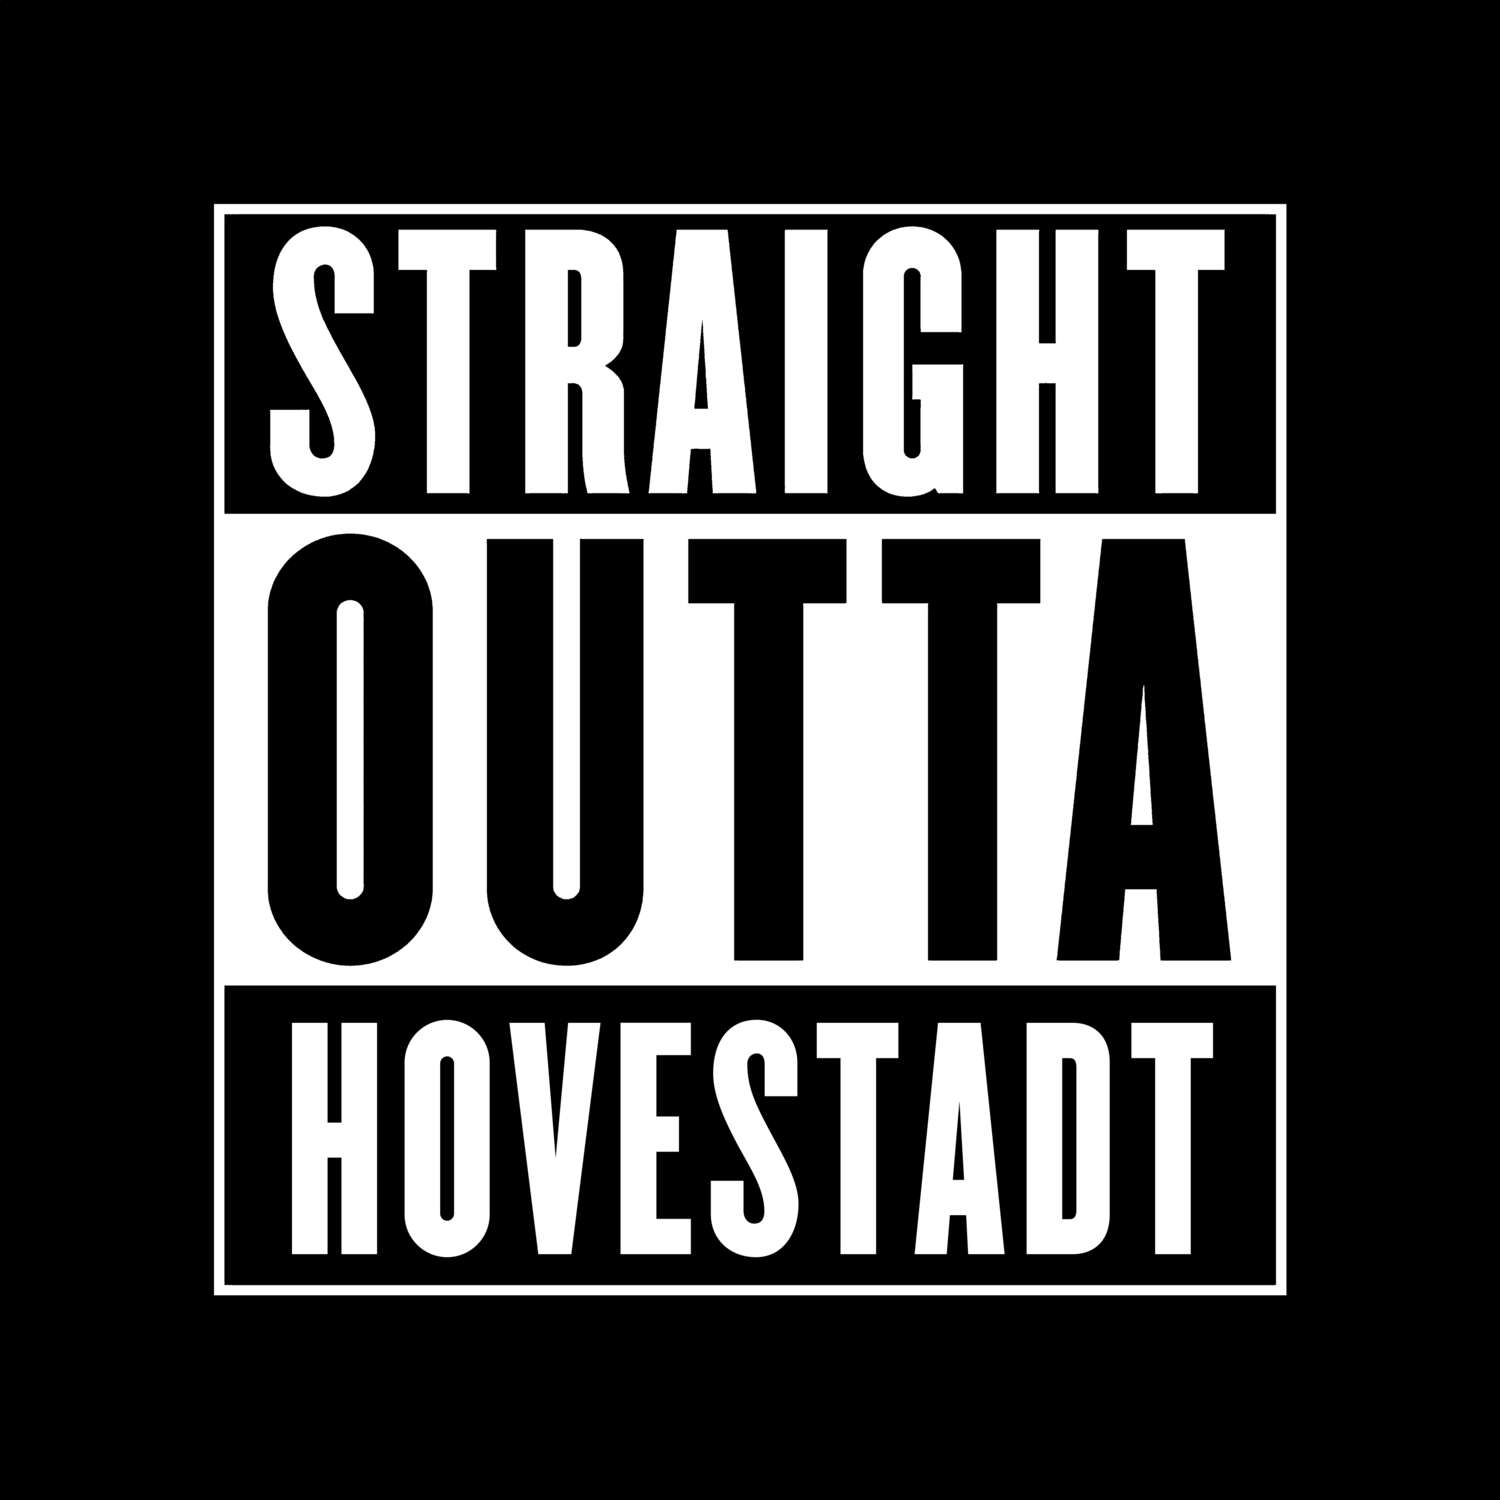 Hovestadt T-Shirt »Straight Outta«